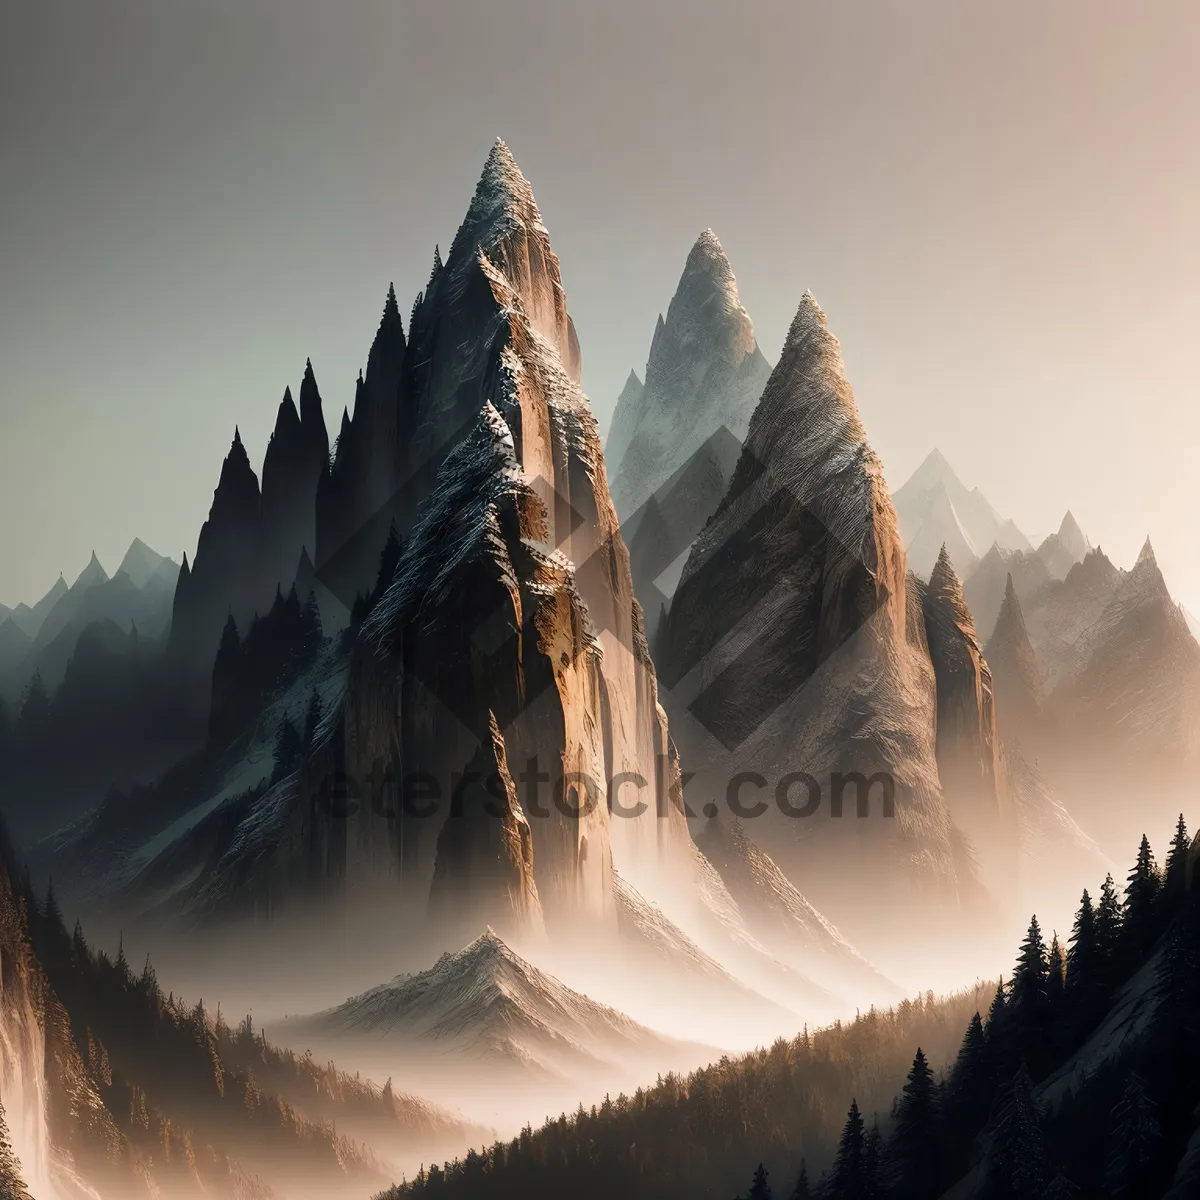 Picture of Snow-capped Alpine Peaks in Winter Wonderland